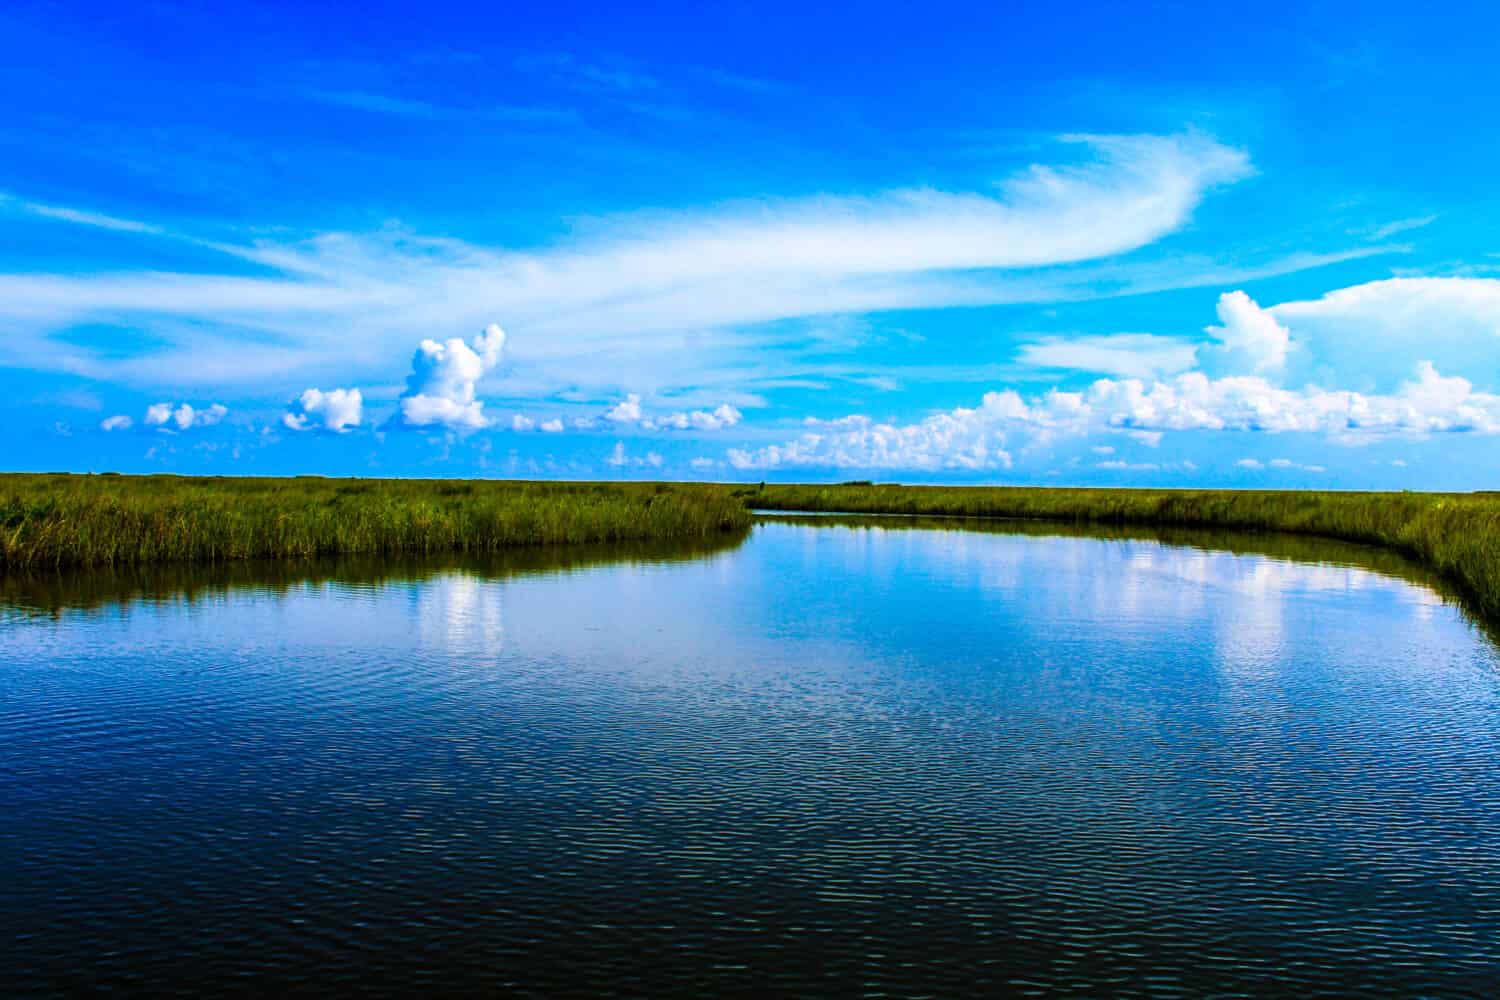 Beautiful Southern Louisiana Bayou surrounded by marsh